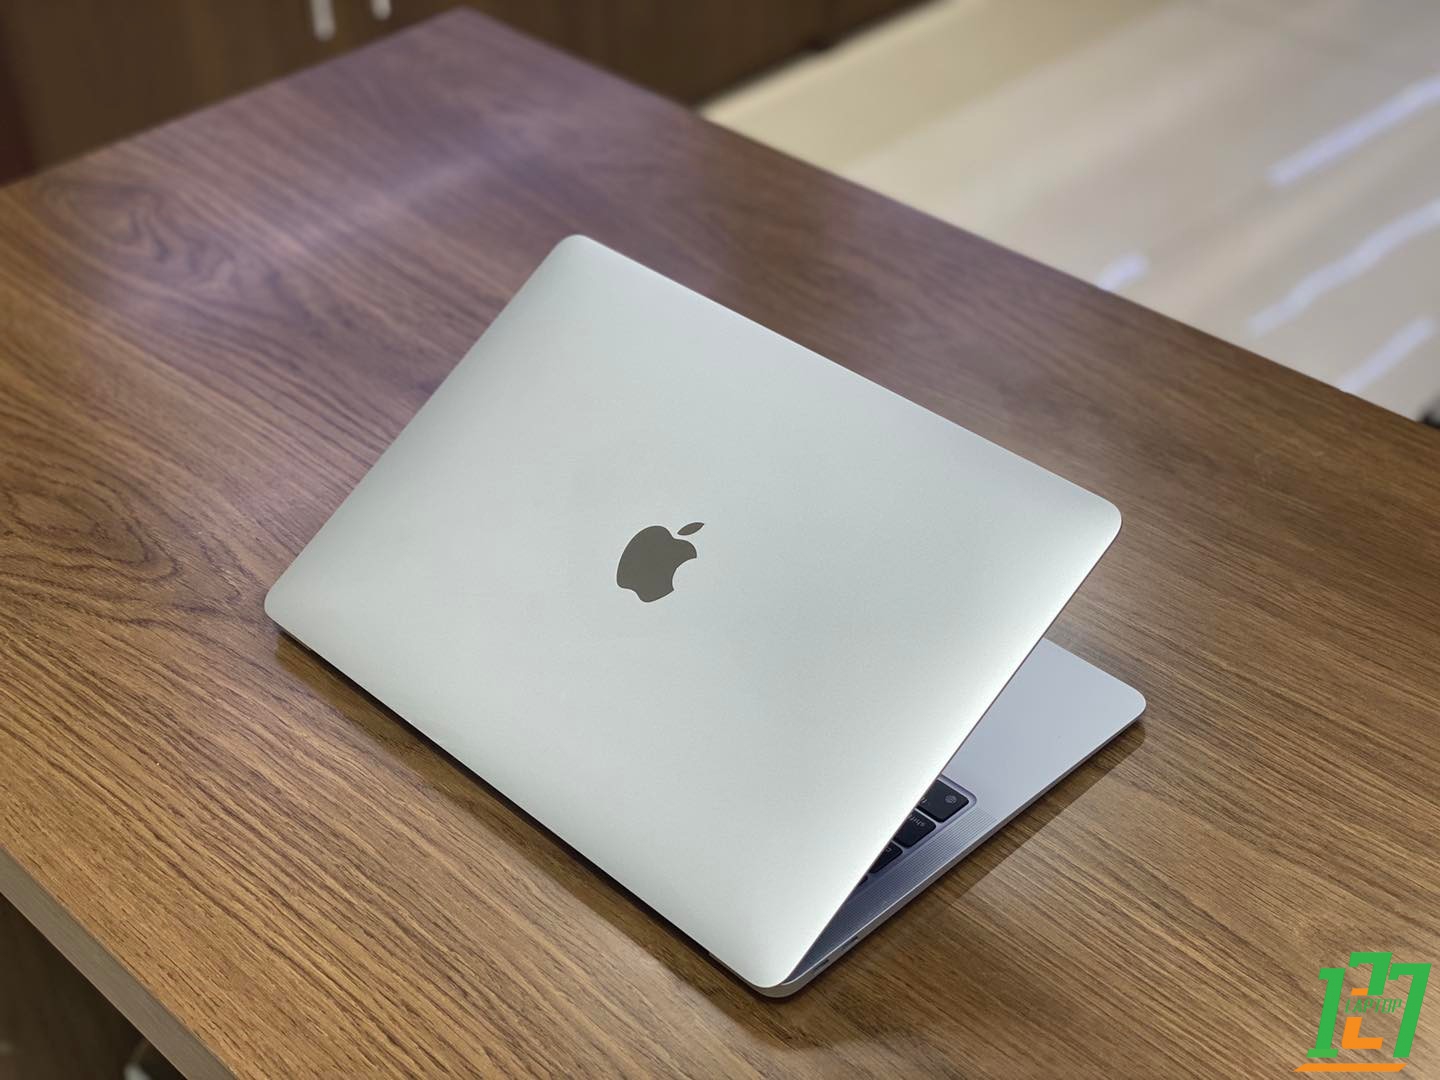 MacBook Air M1 2020 13 inch